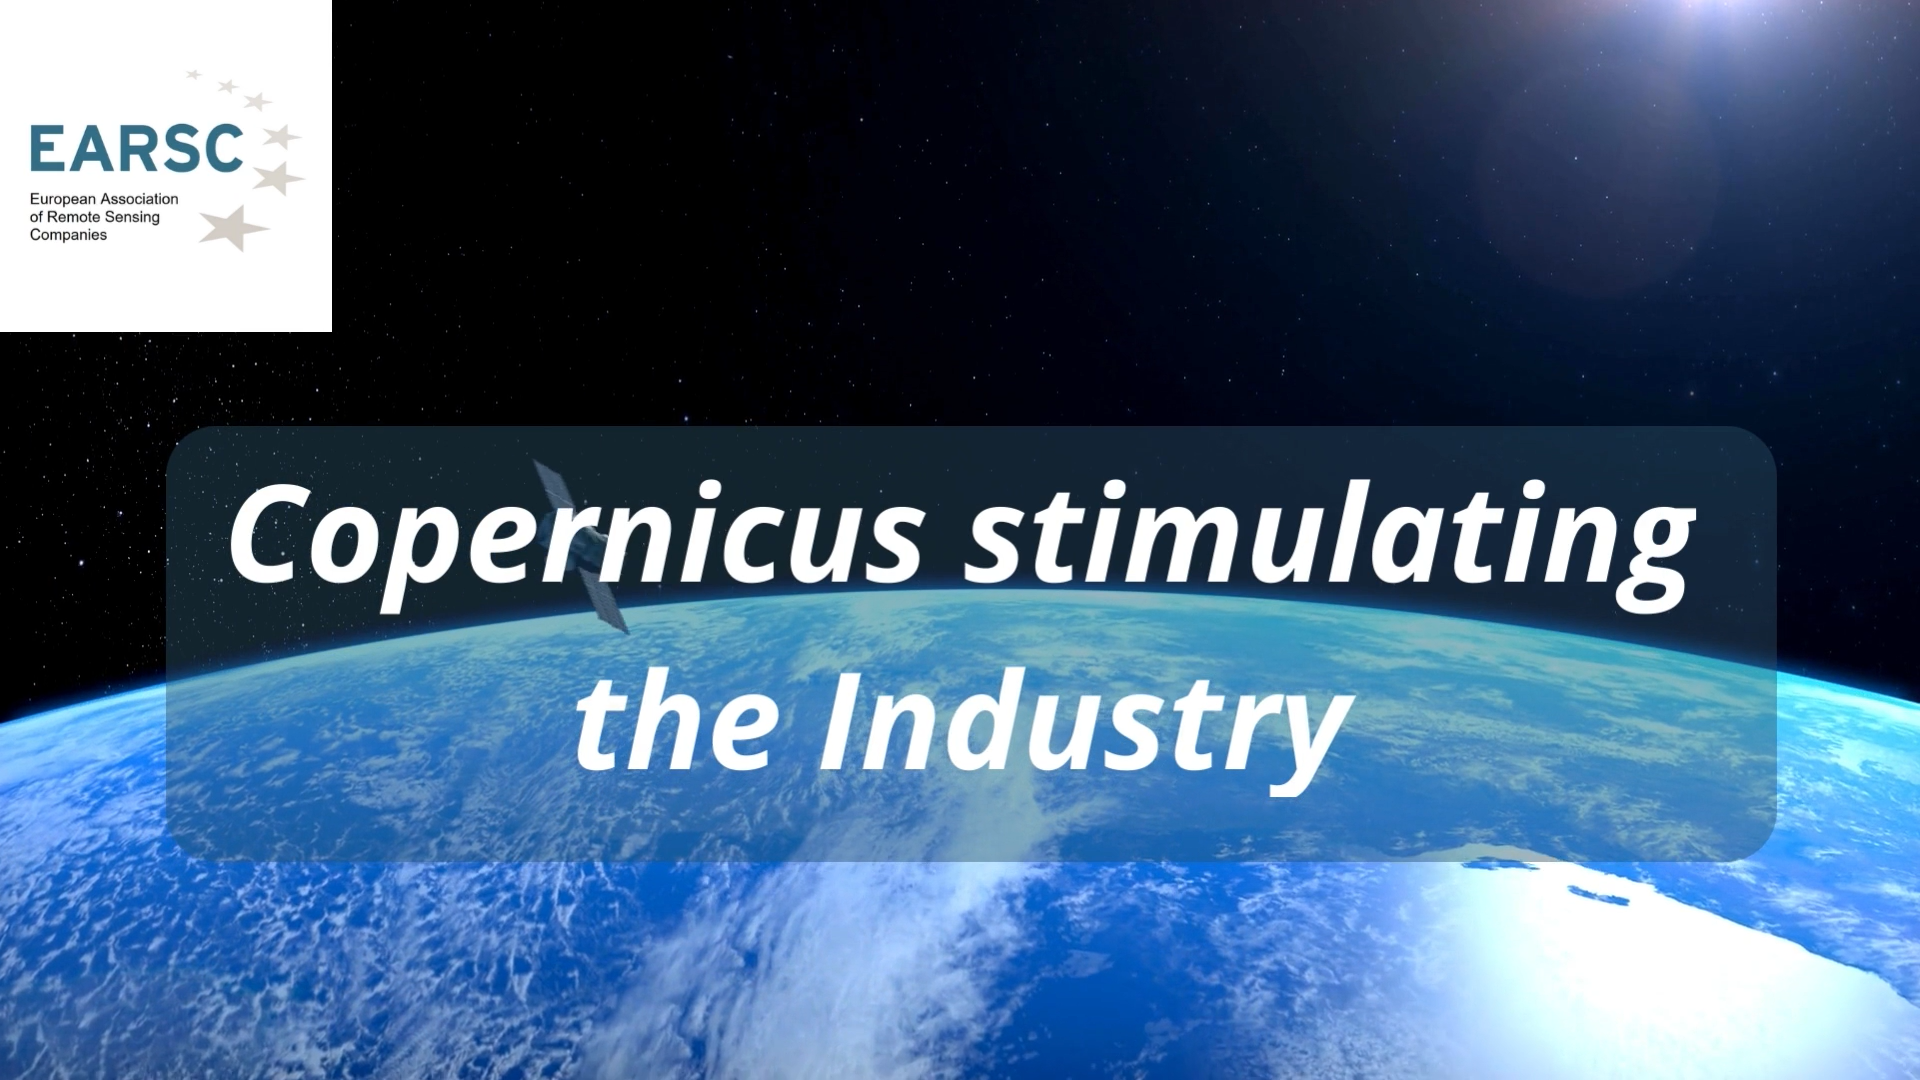 Copernicus stimulating the Industry